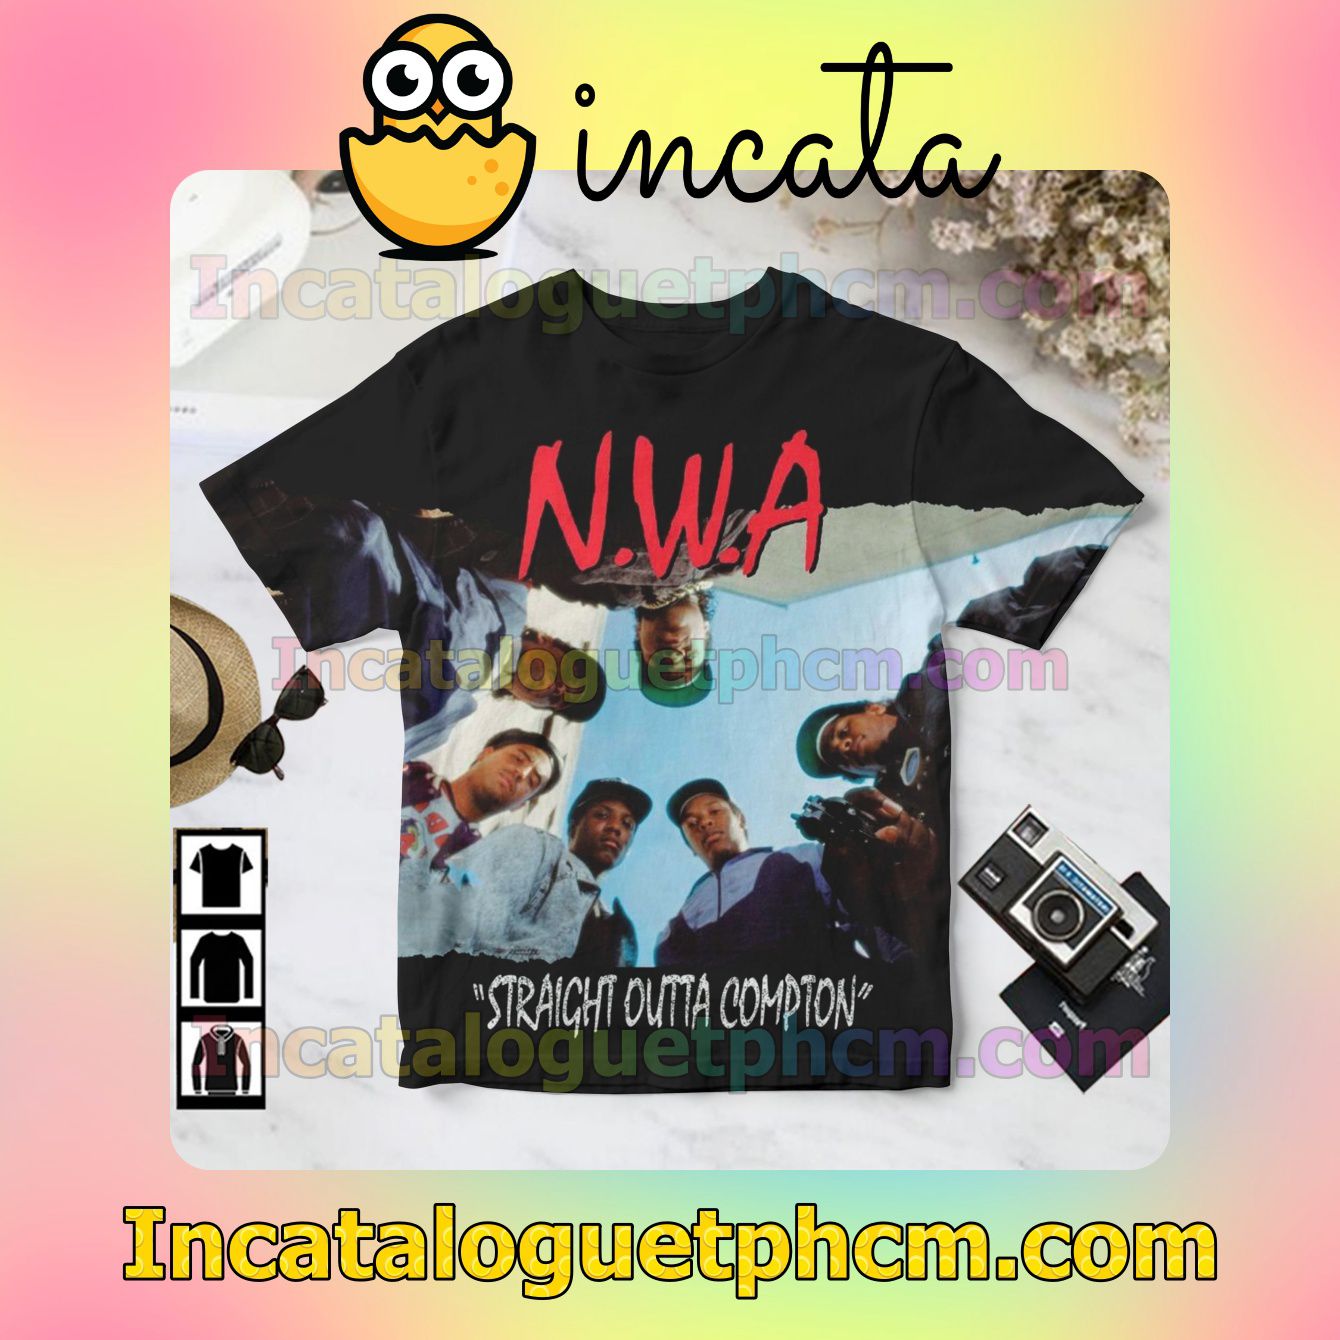 N.w.a Straight Outta Compton Album Cover Gift Shirt